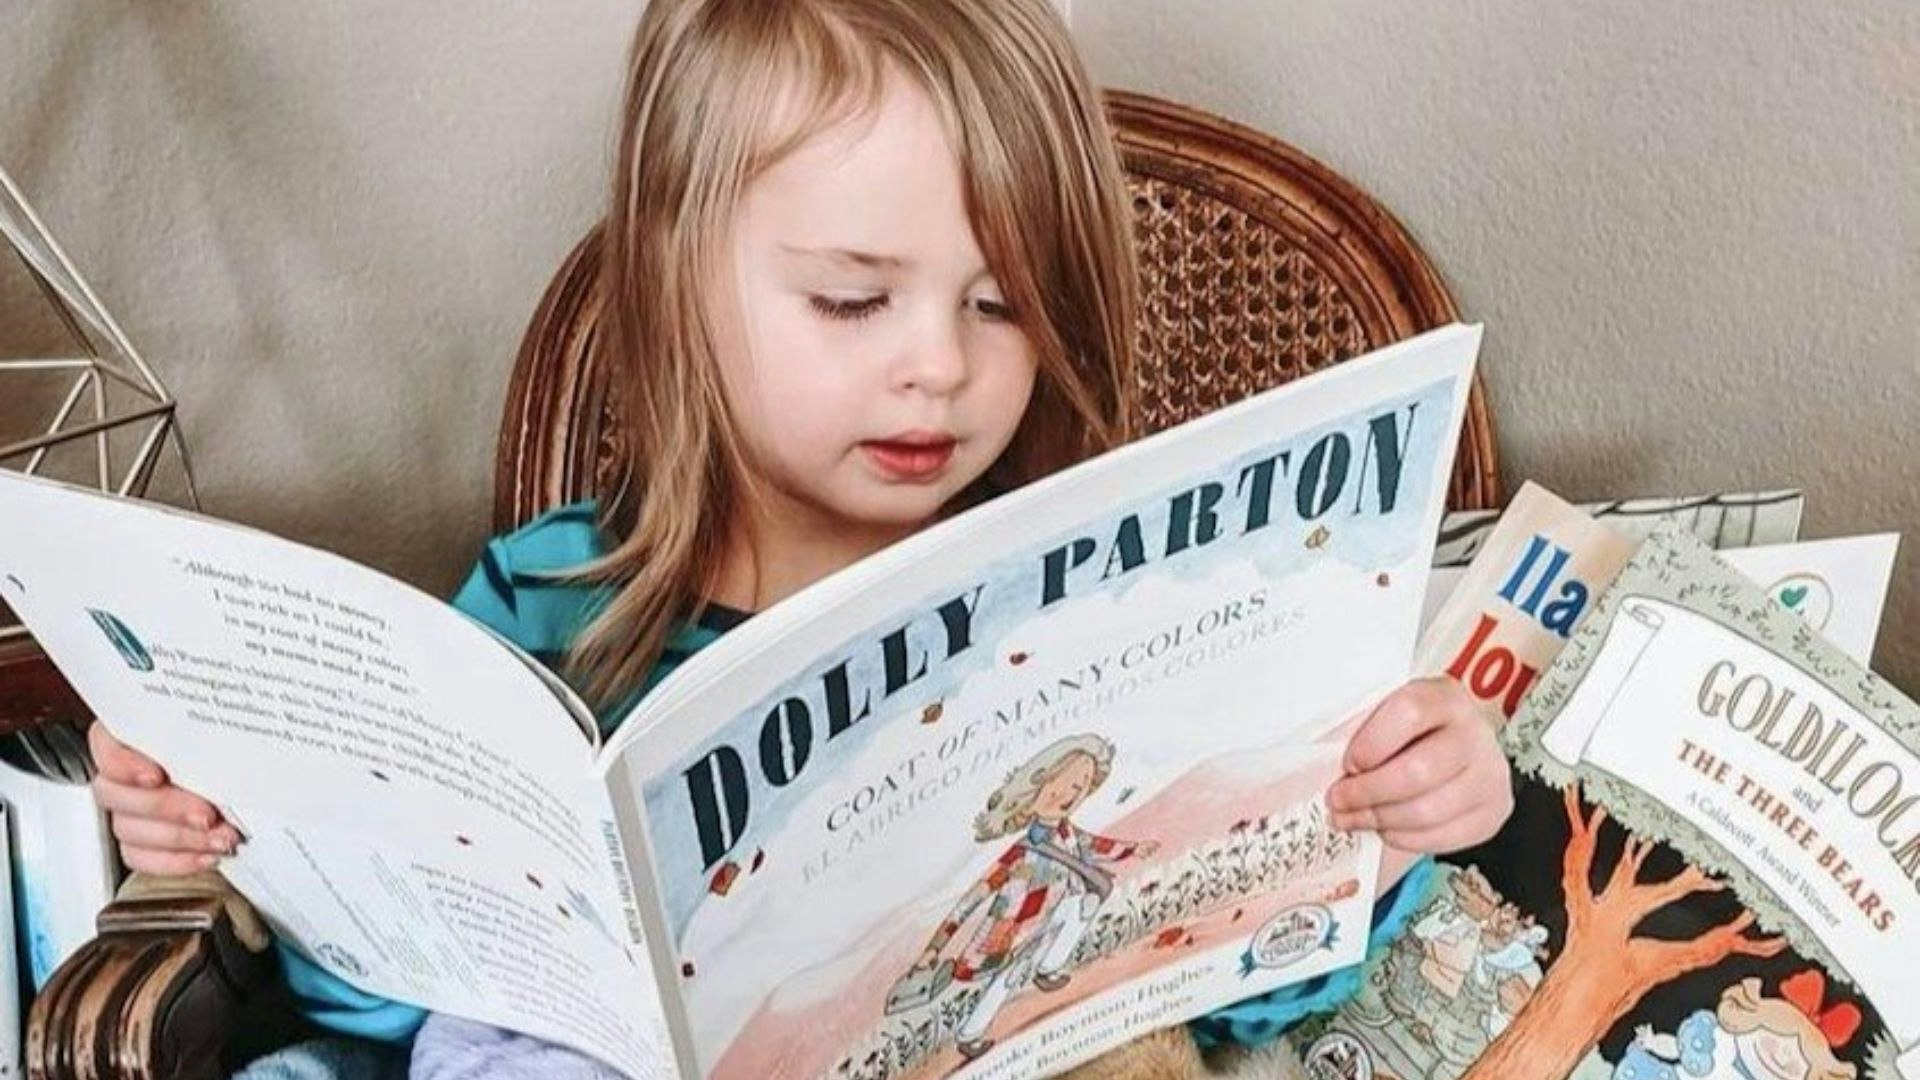 Dolly Parton Books 3 18 23